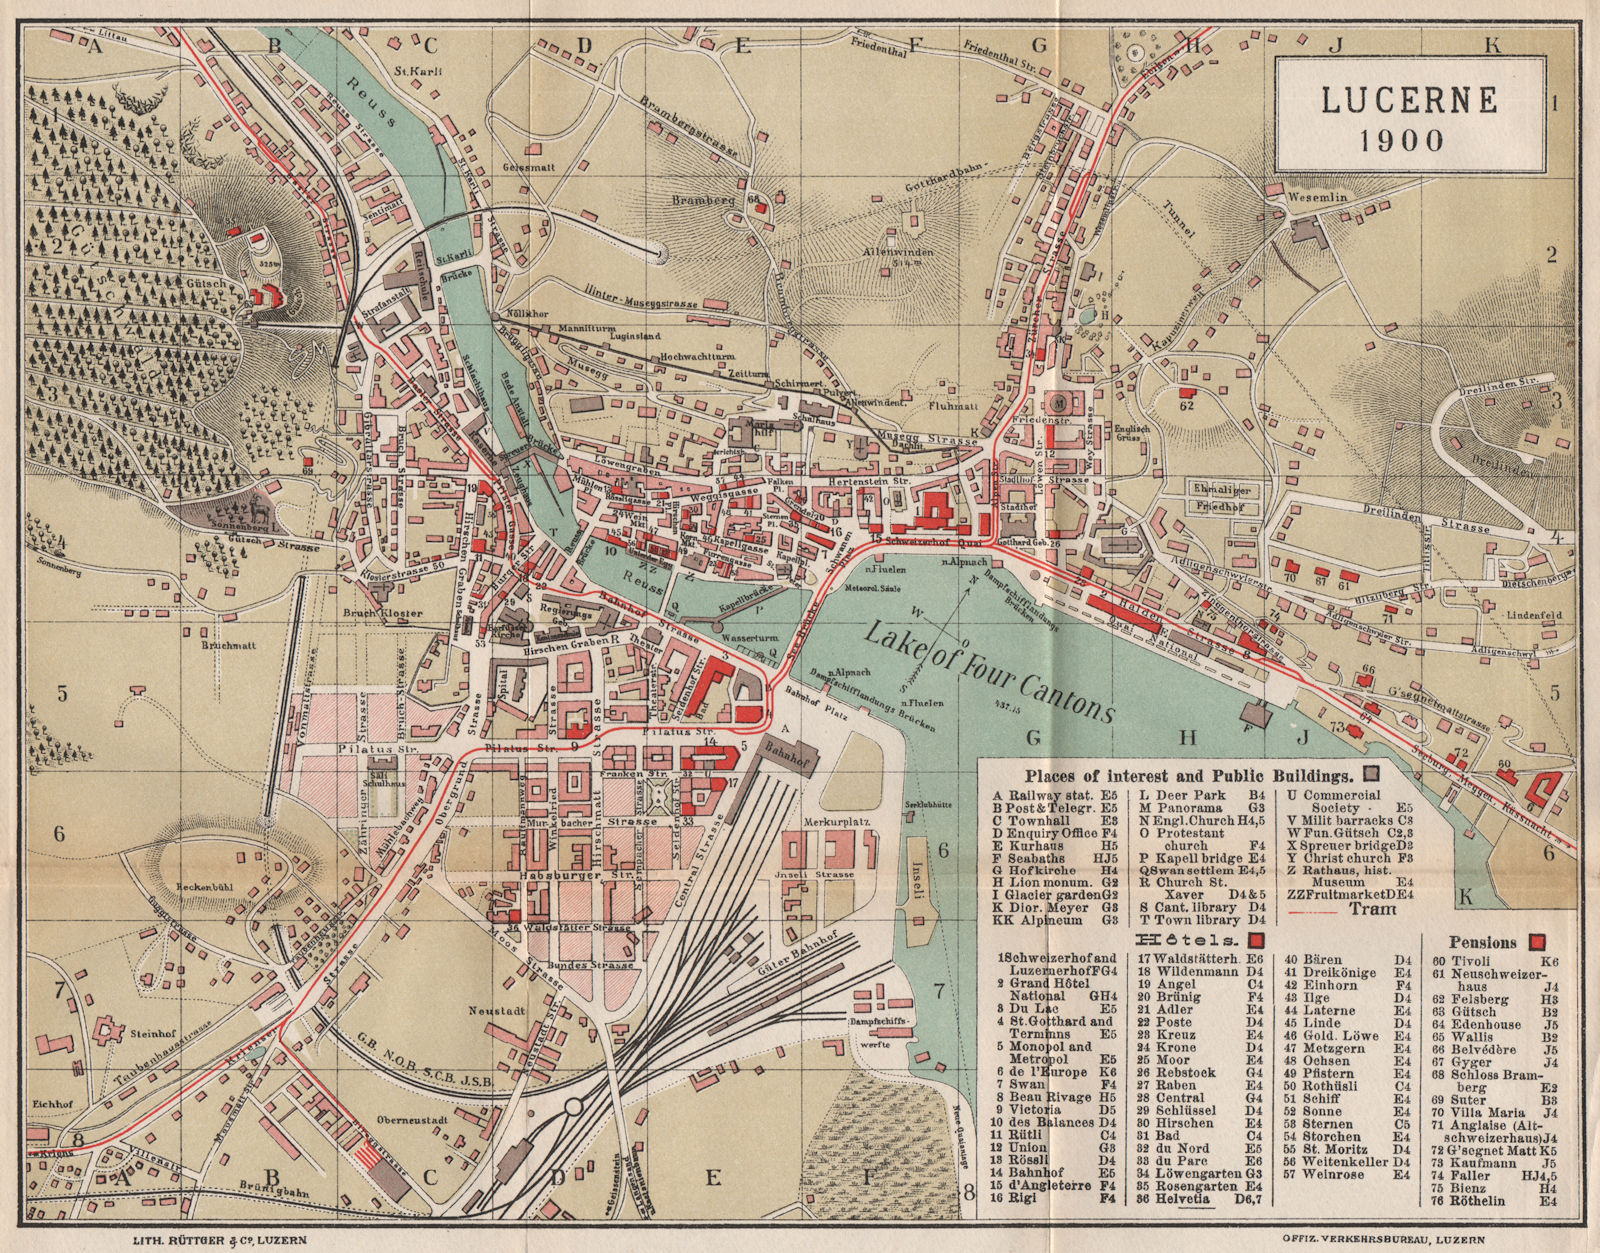 LUCERNE 1900. Antique town plan. Switzerland. Luzern. THOMAS COOK 1900 old map